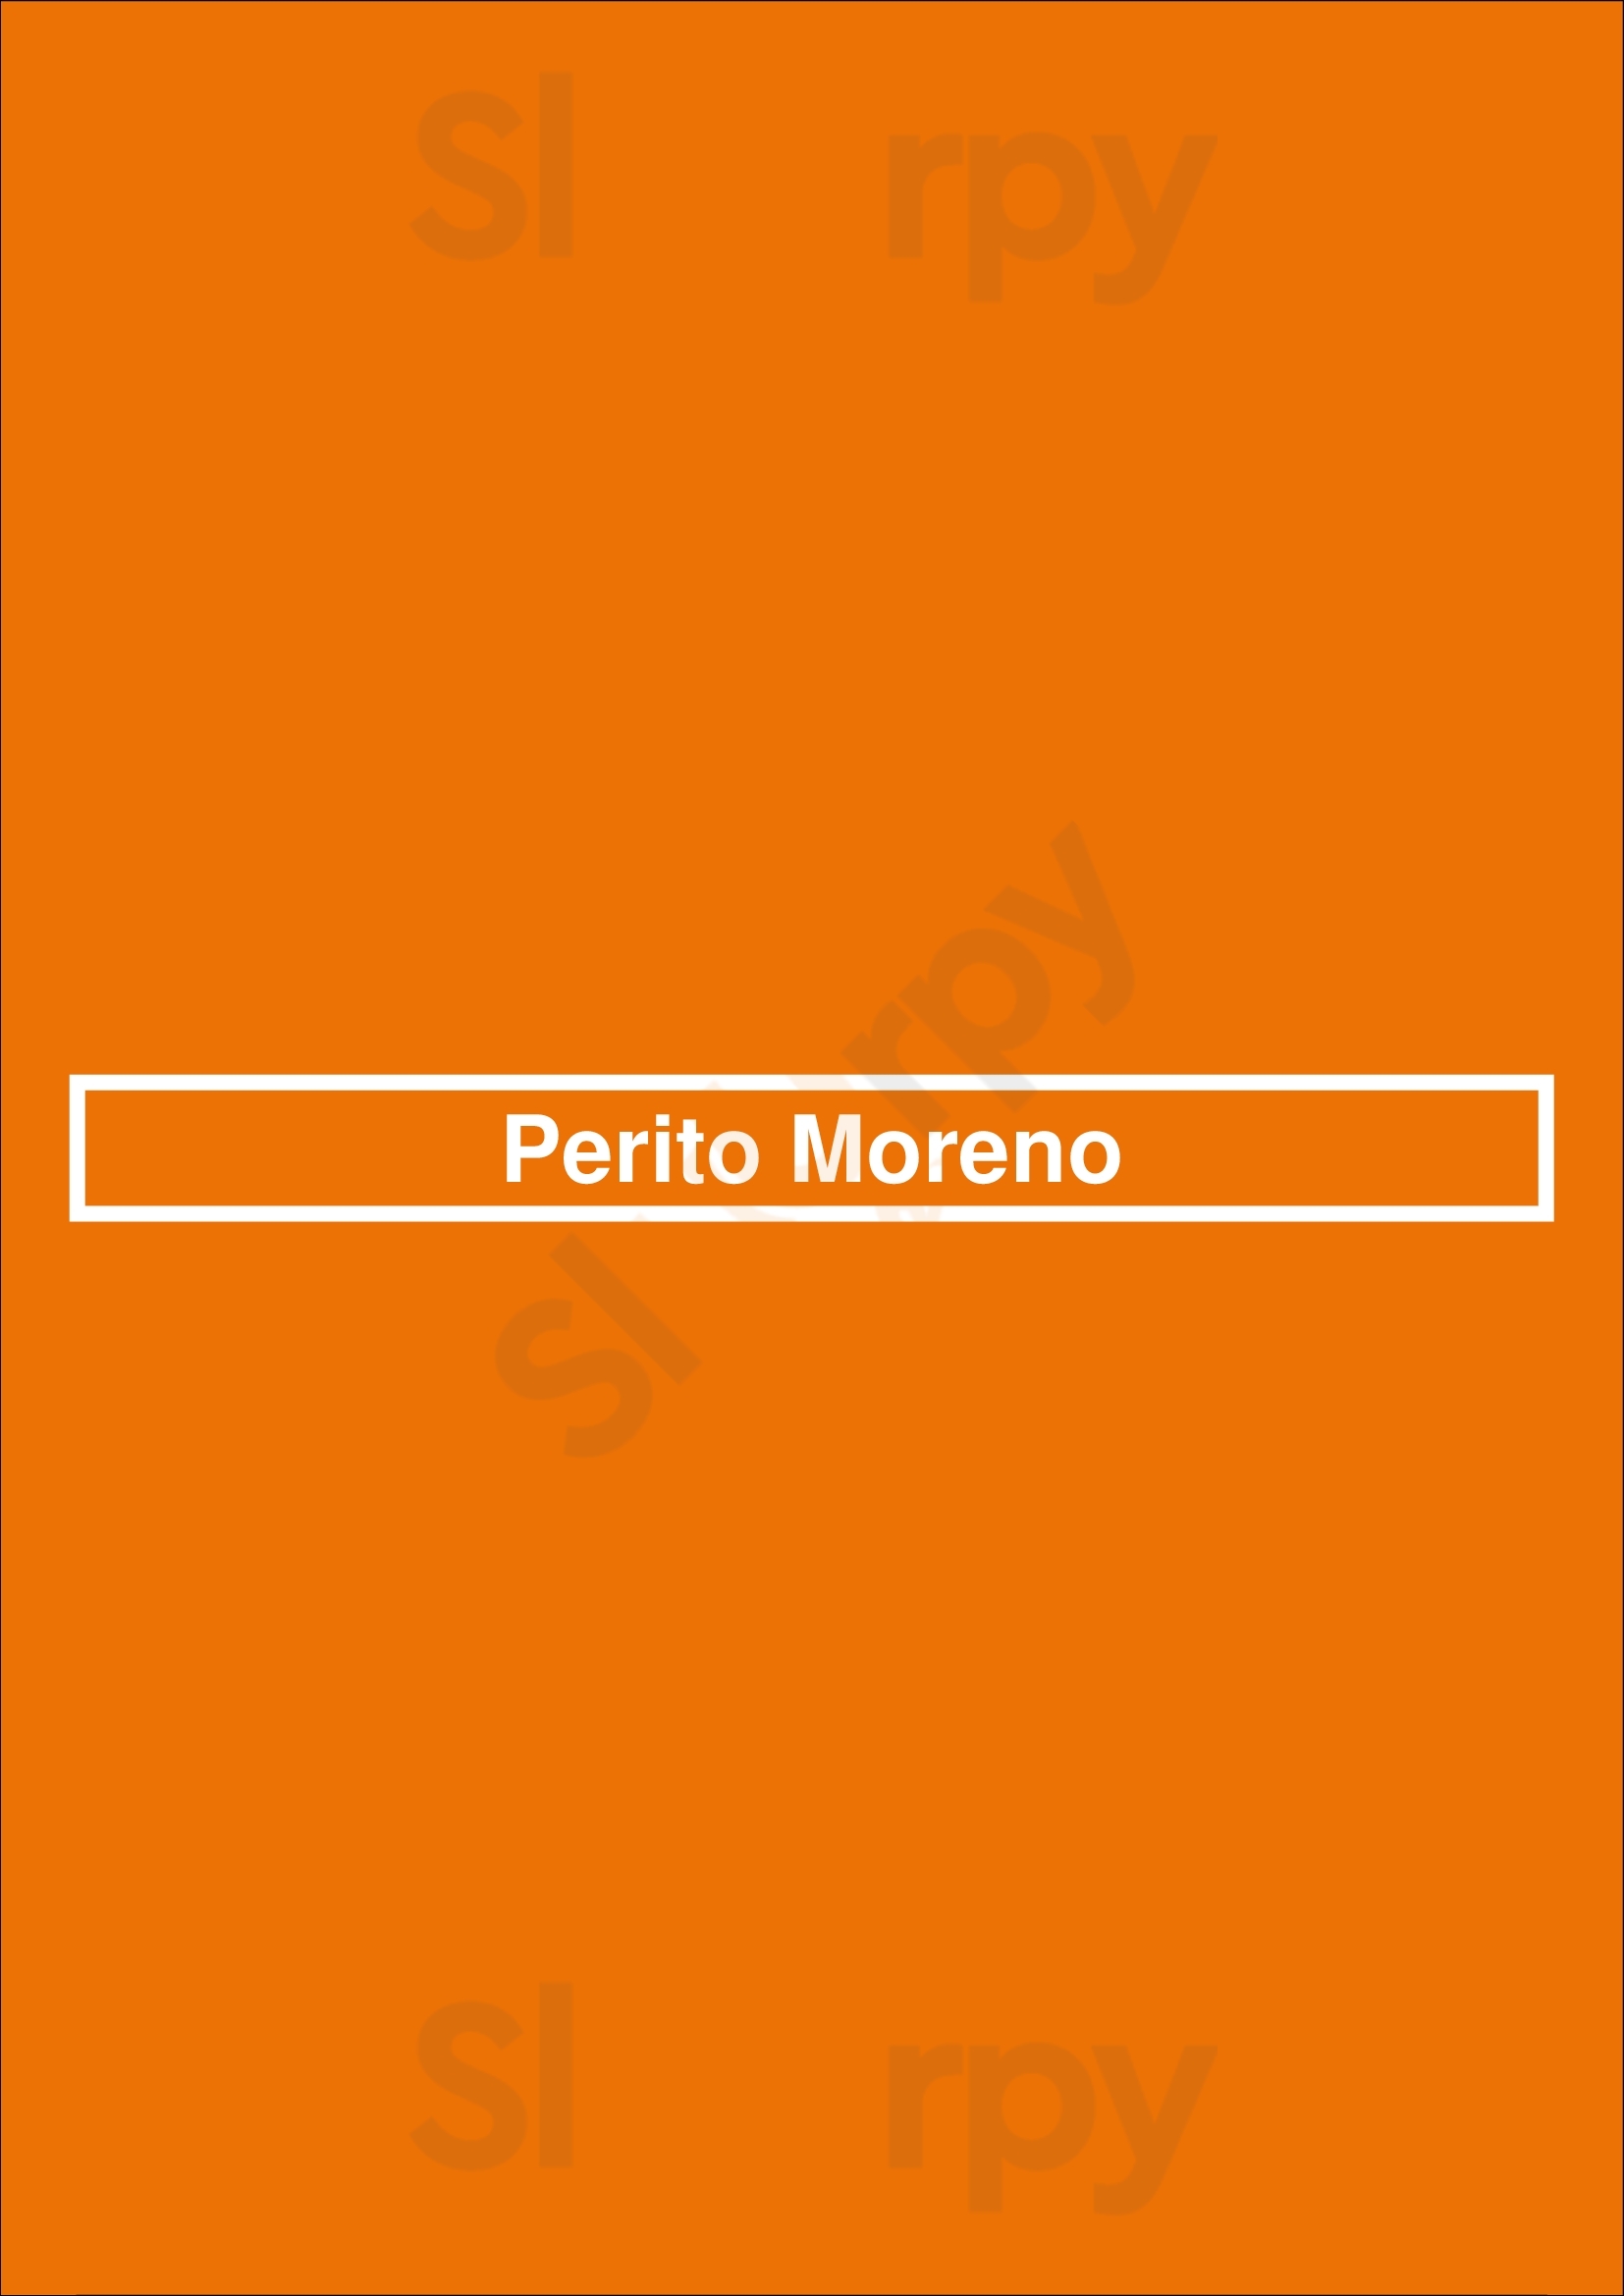 Perito Moreno Uithoorn Menu - 1